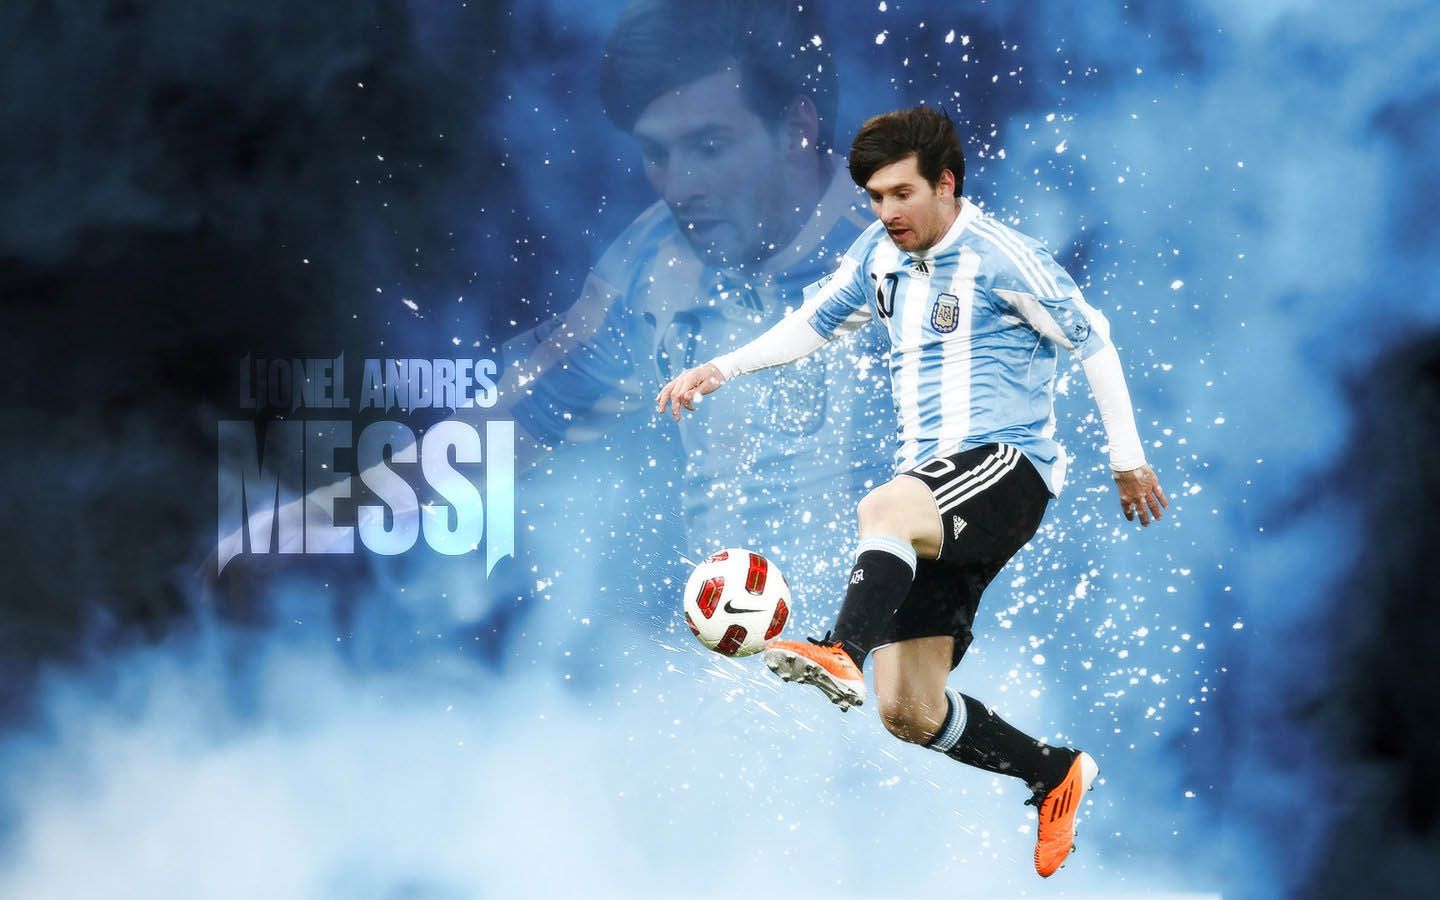 Lionel Messi Argentina HD Wallpaper In Football Imageci